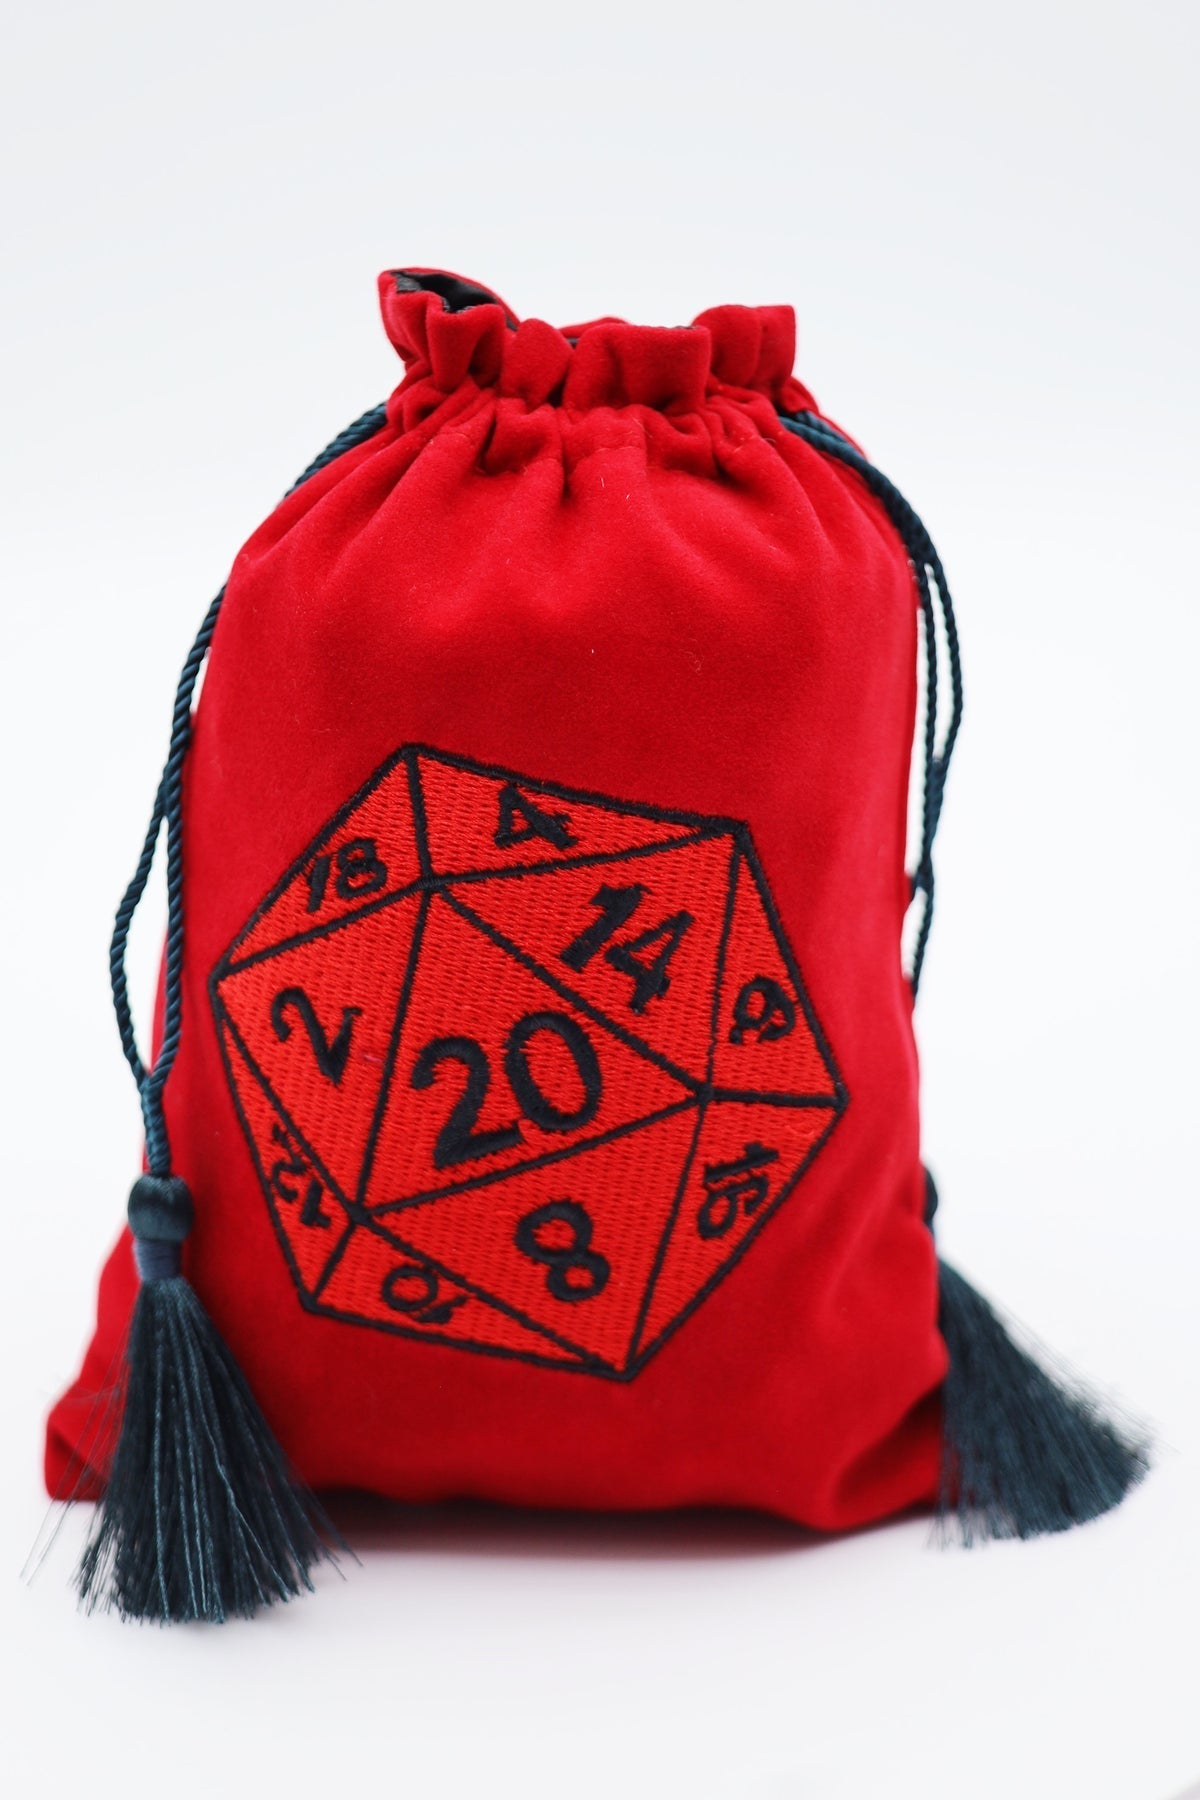 Dice Bag - Red D20 | Grognard Games